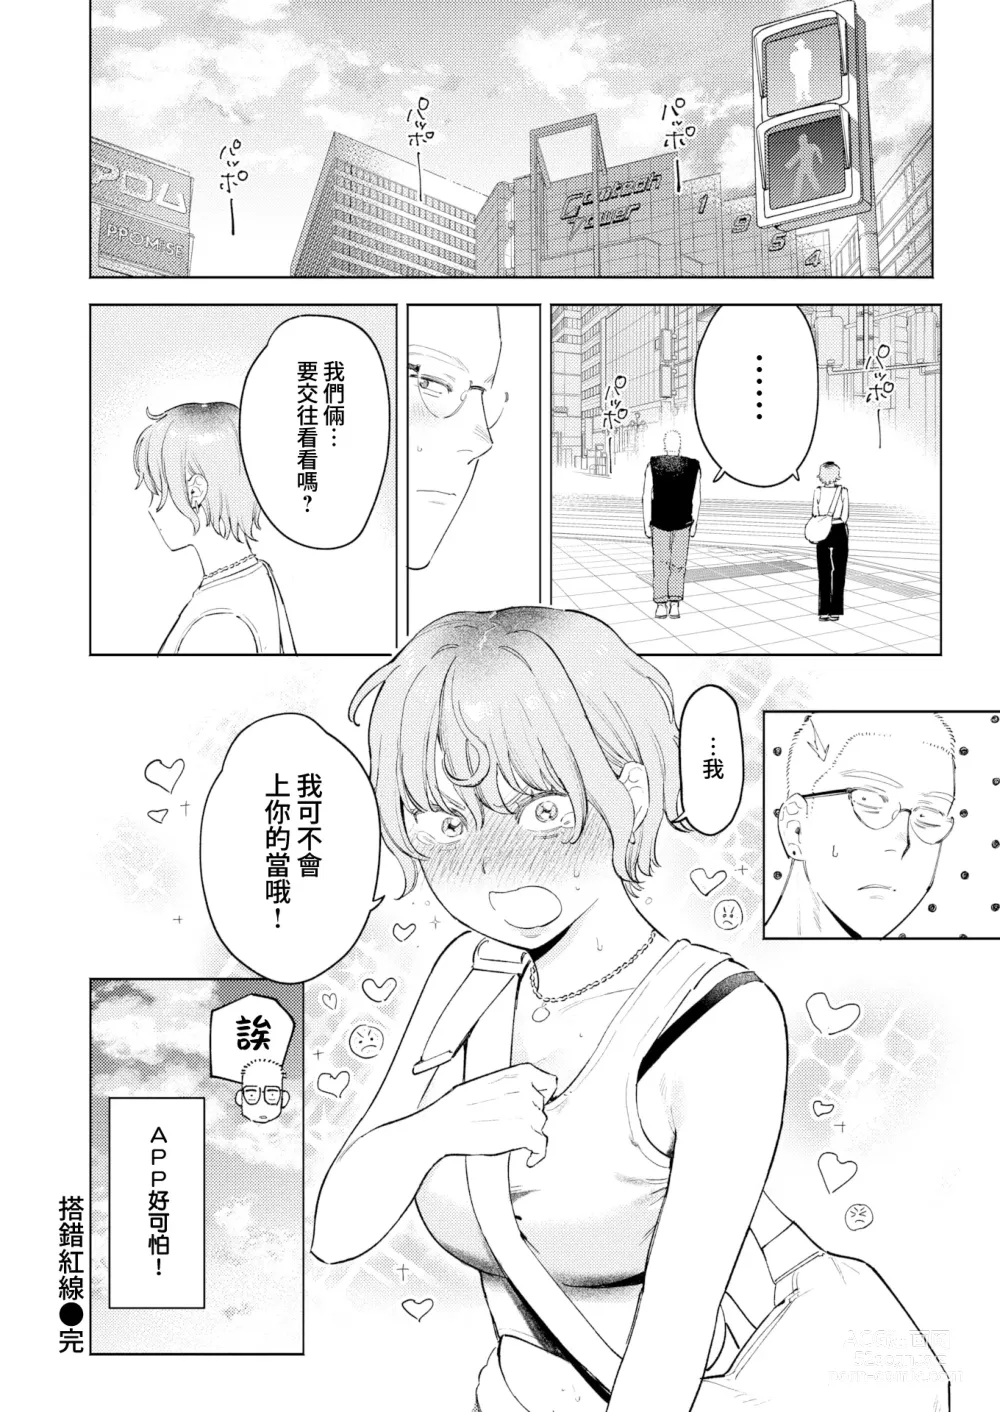 Page 24 of manga 搭錯紅線